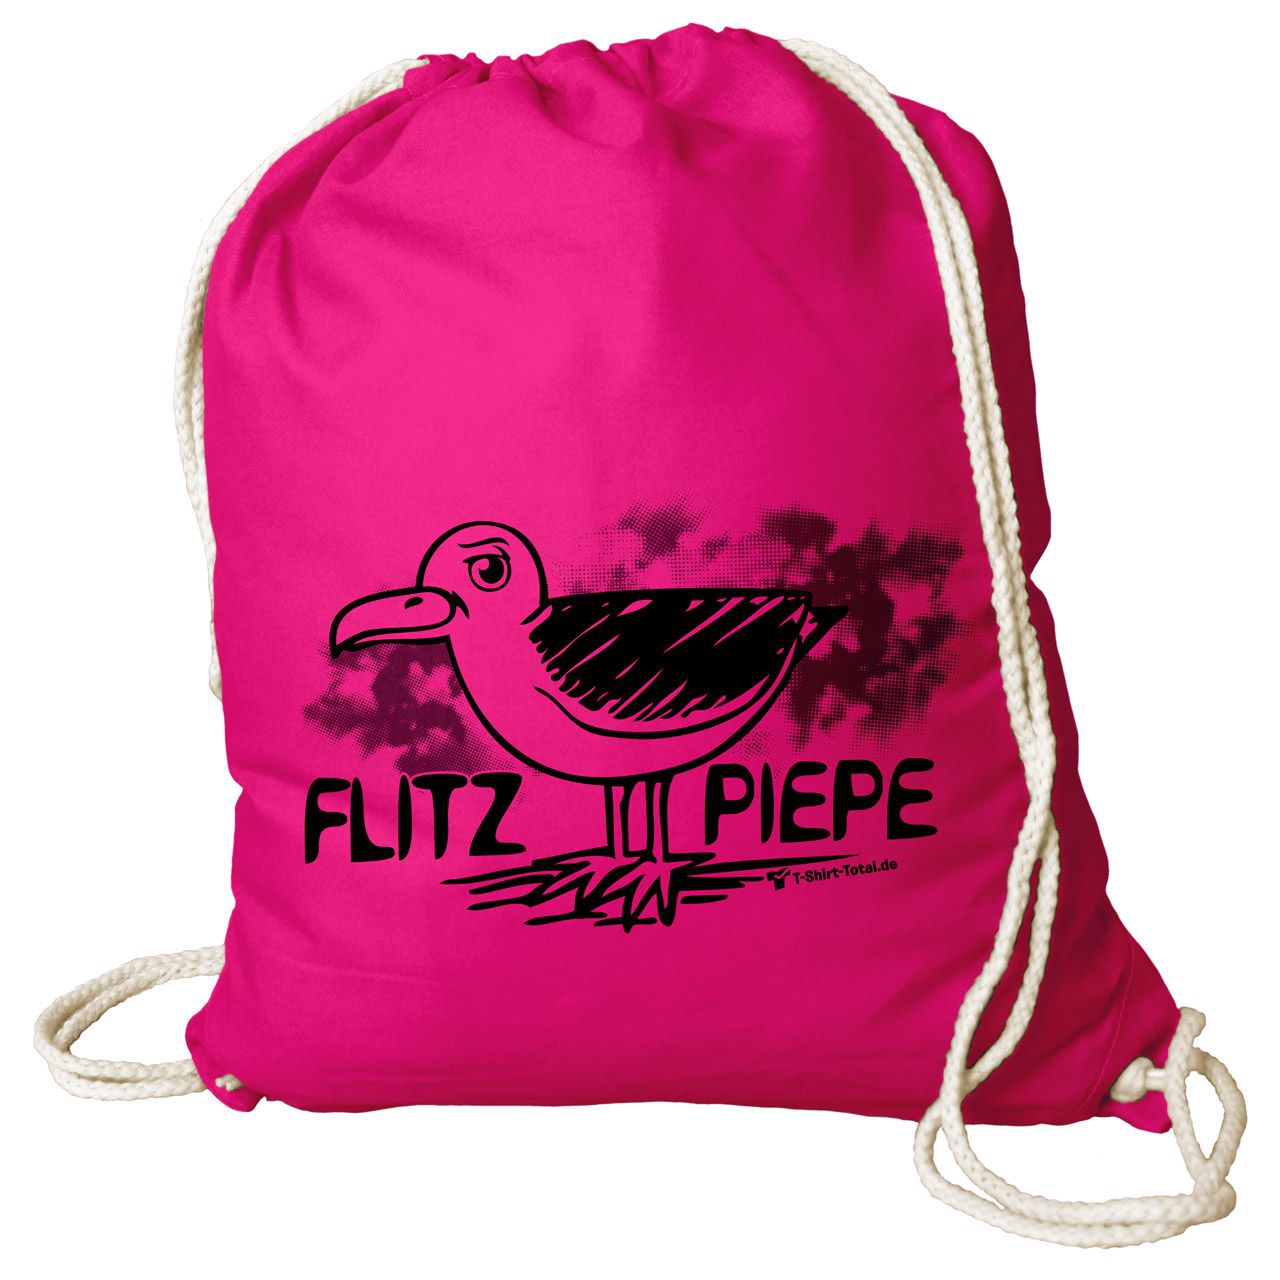 Flitzpiepe Rucksack Beutel pink